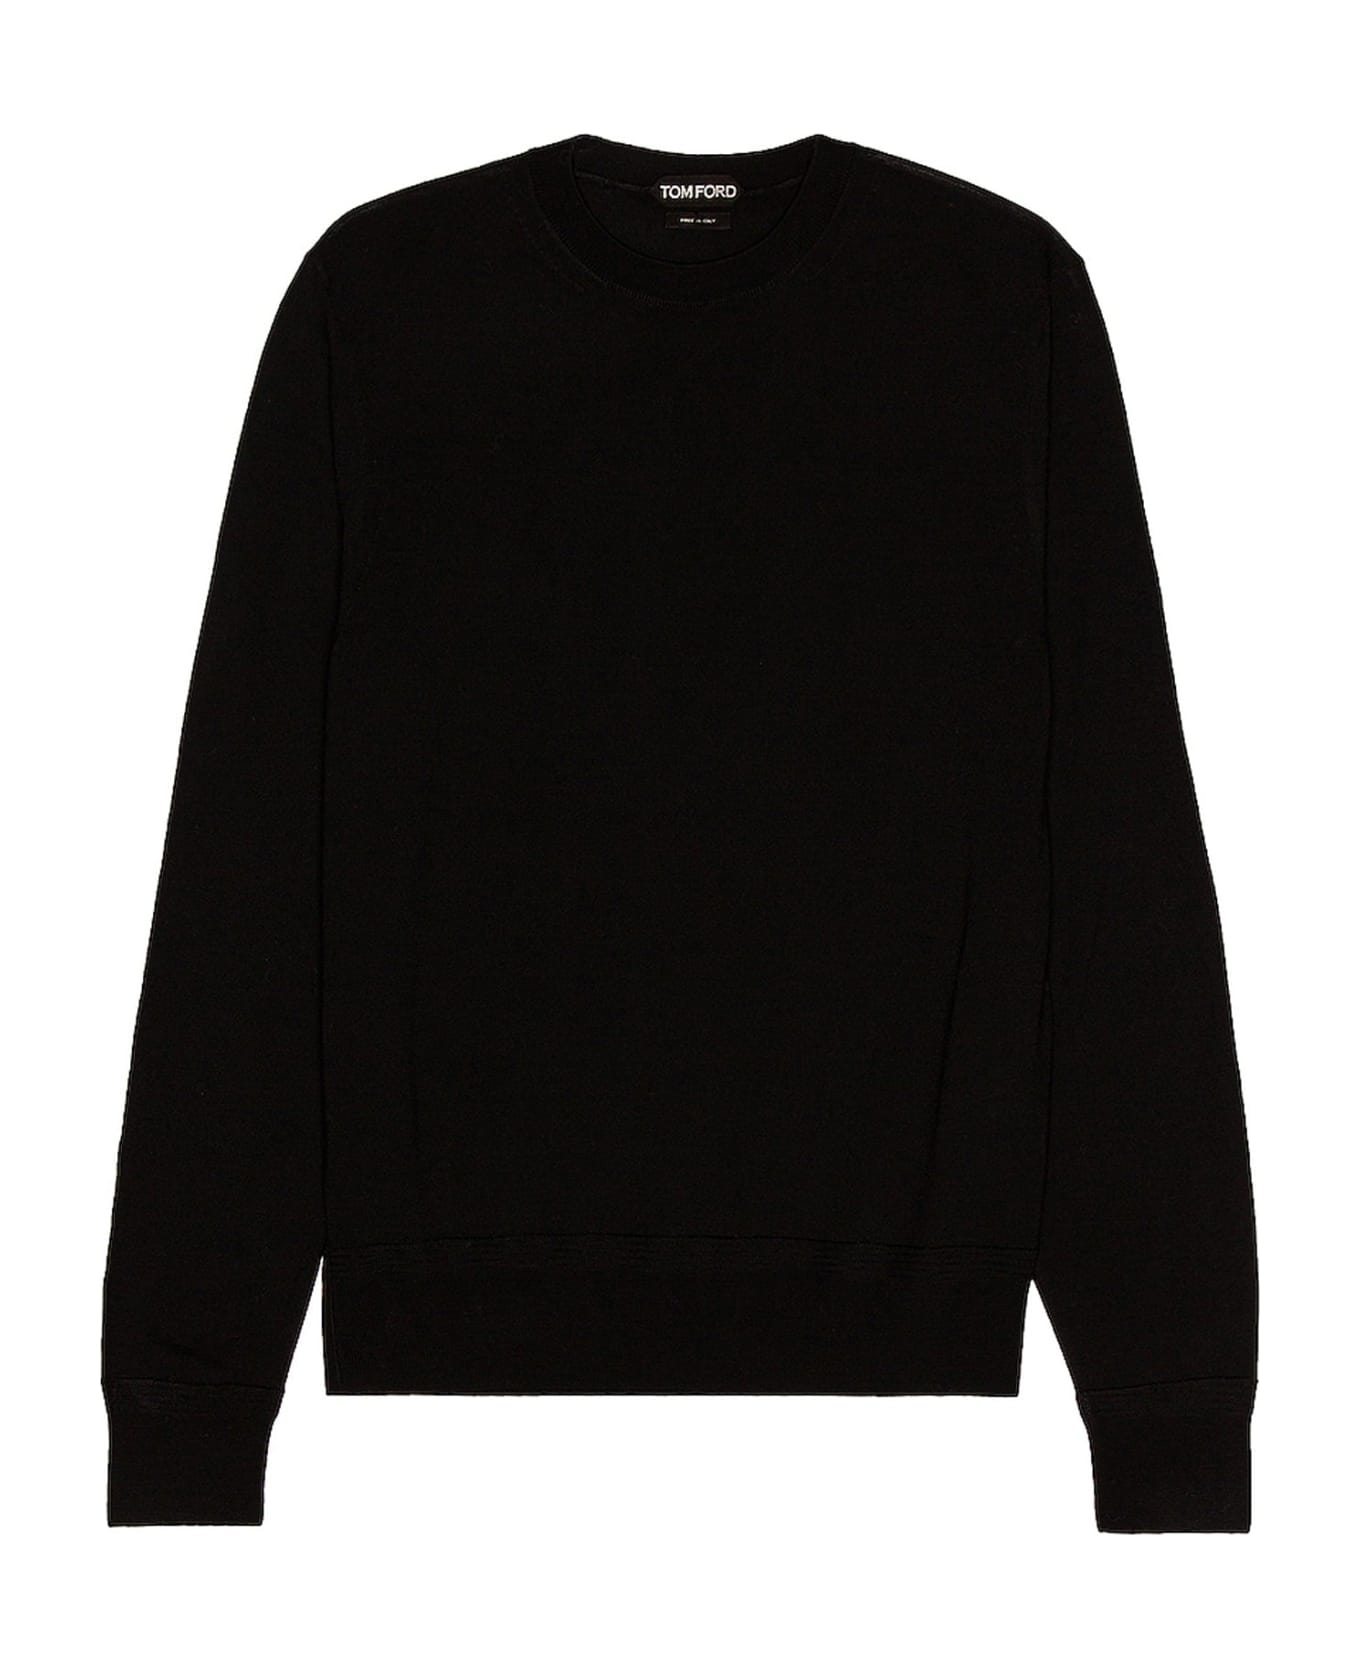 Tom Ford Cashmere Stitch Sweater - Black フリース